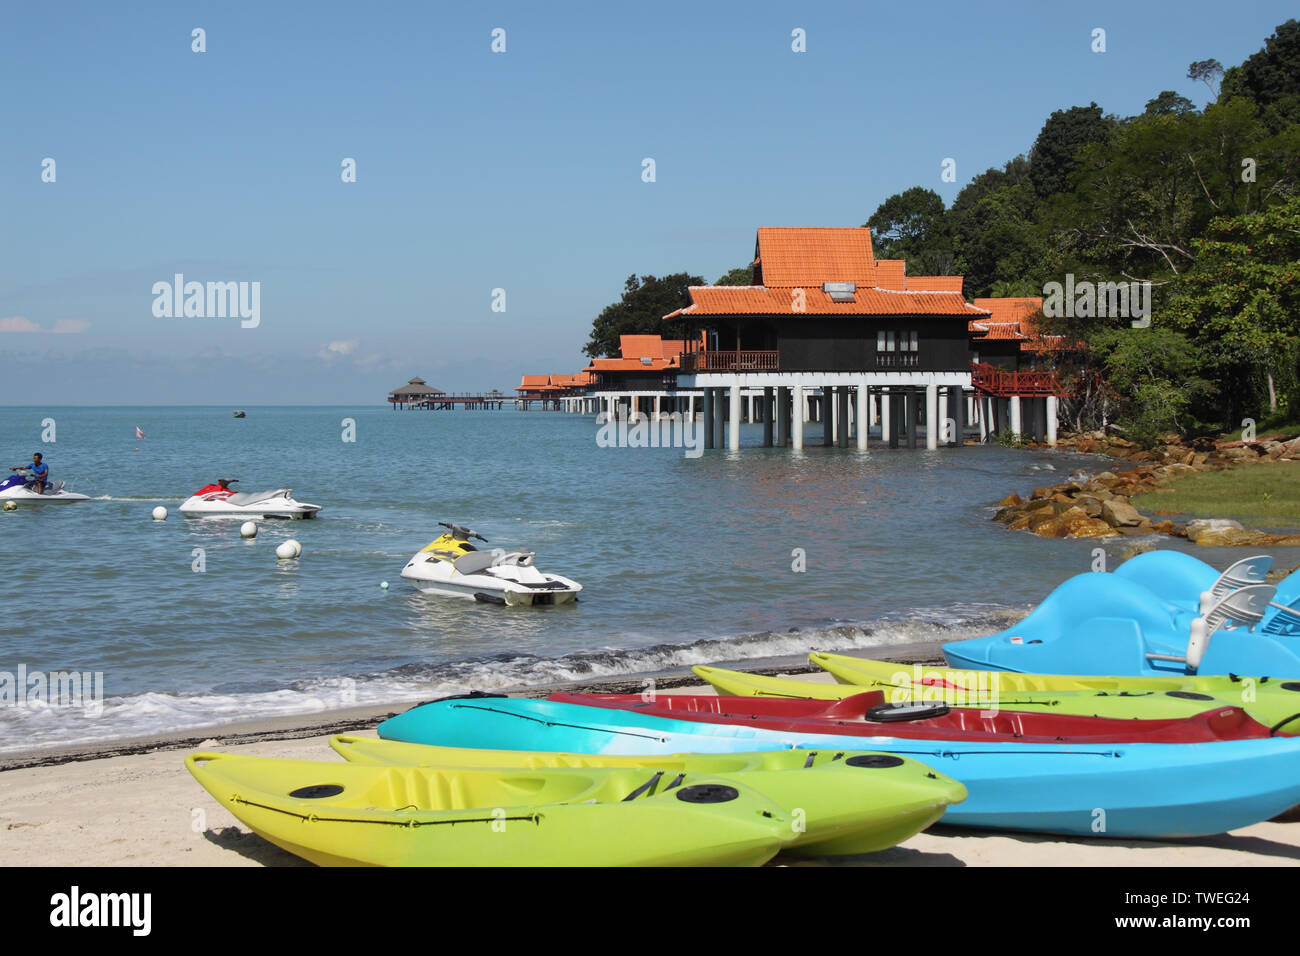 Tourist resort at the seaside, Langkawi Island, Malaysia Stock Photo